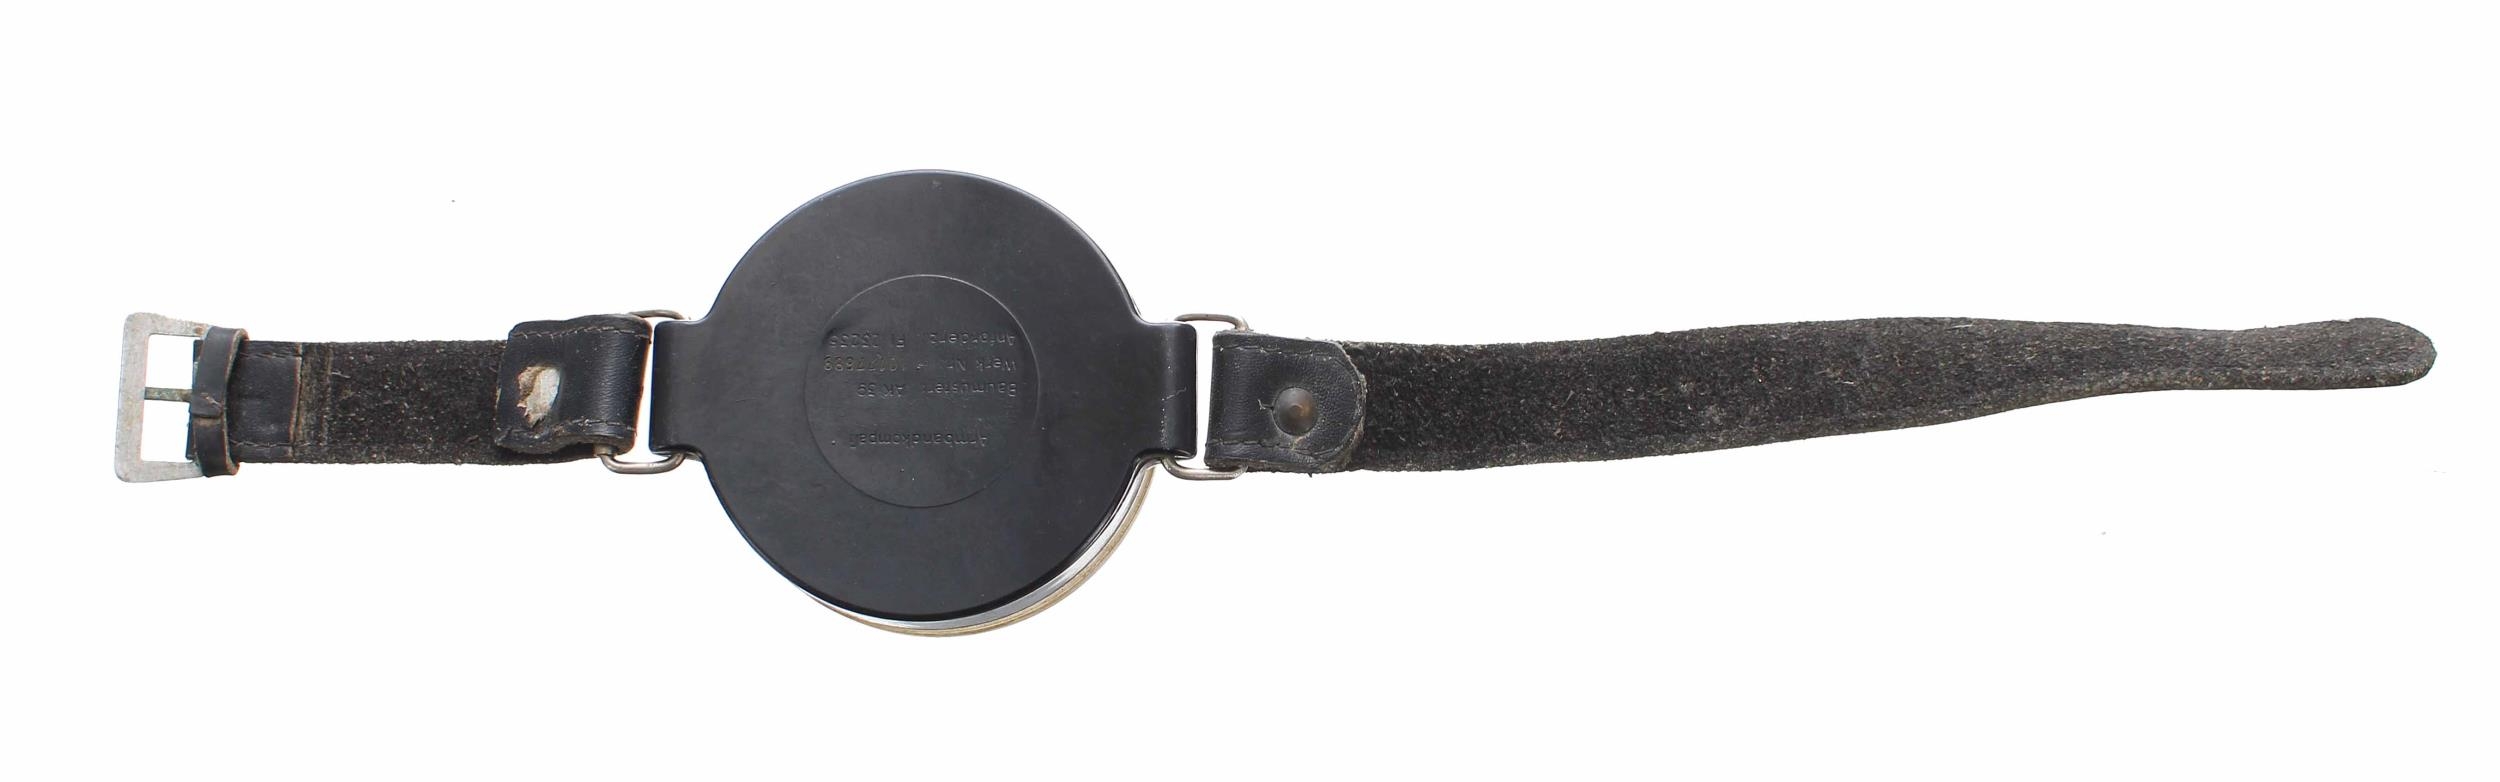 WWII Luftwaffe Armbandkompass / wrist compass, stamped AK 39, 6cm diameter FL 23235 - Image 2 of 2